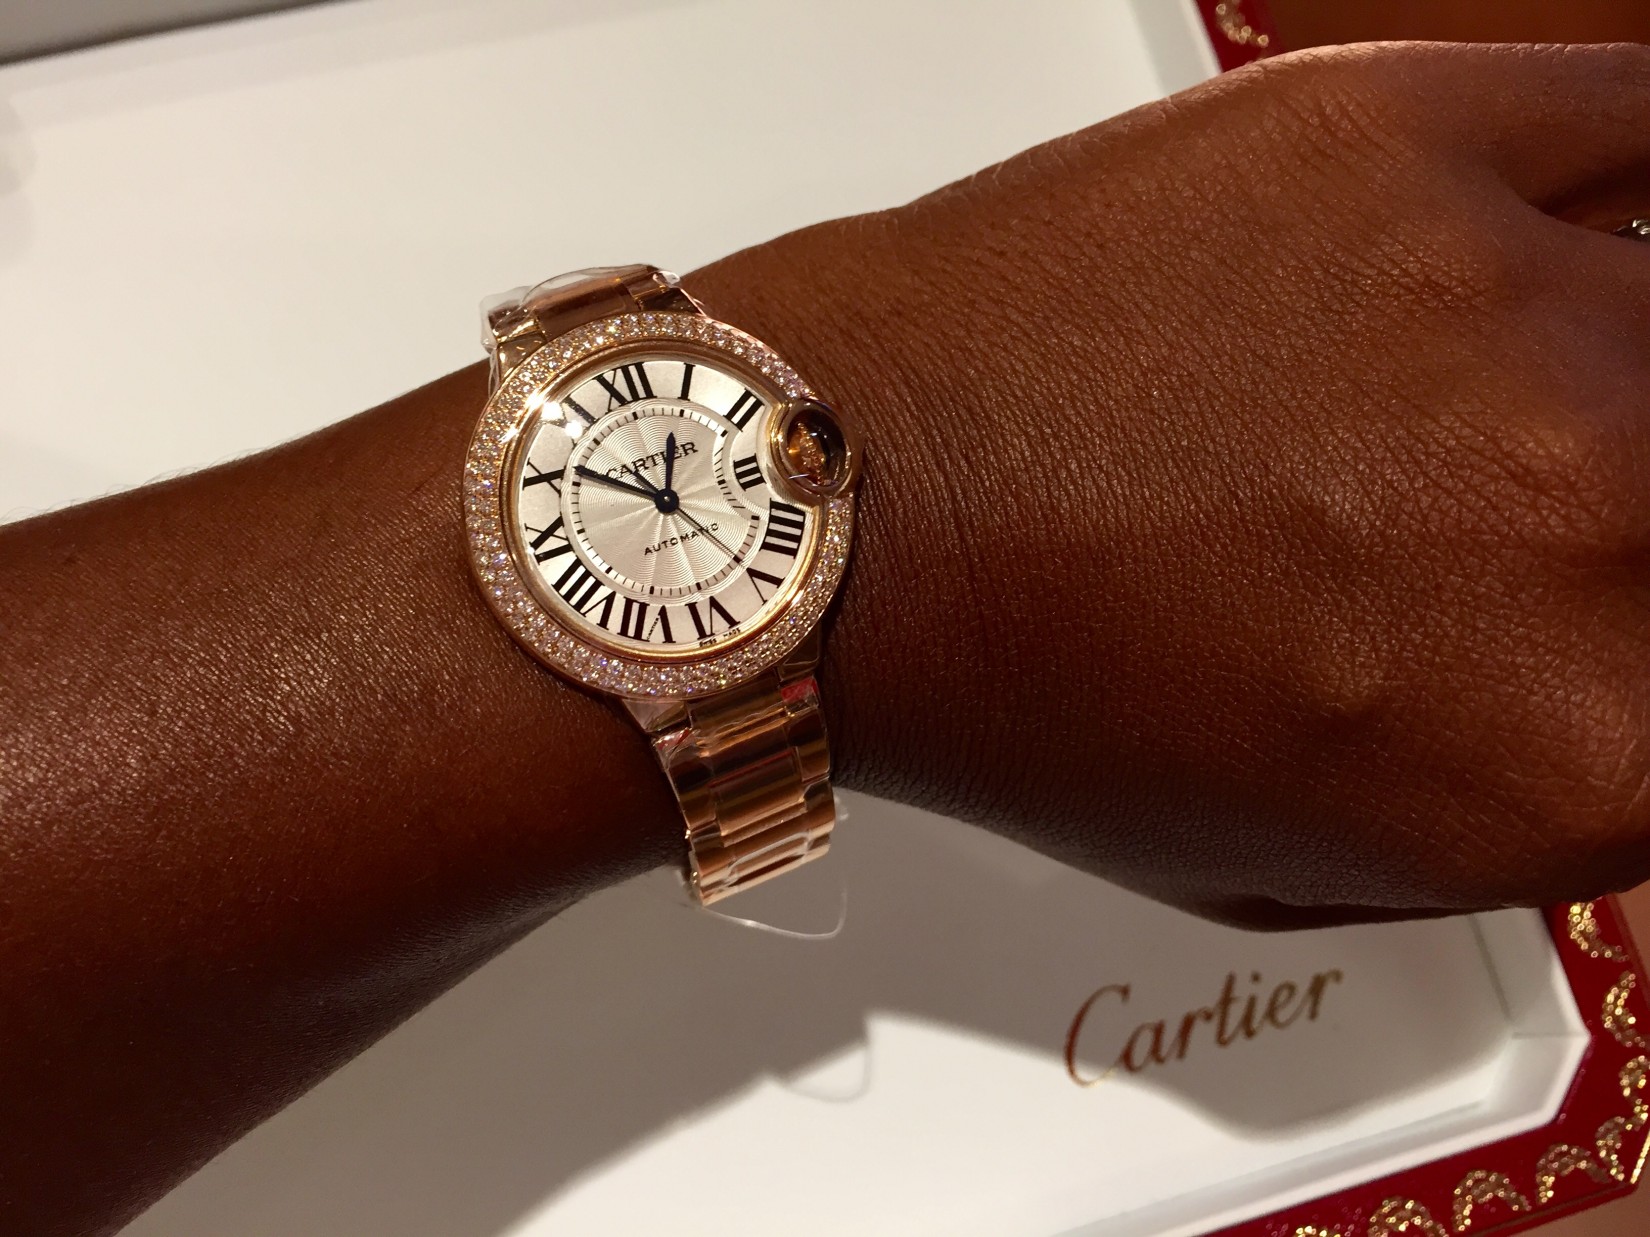 Cartierwatch